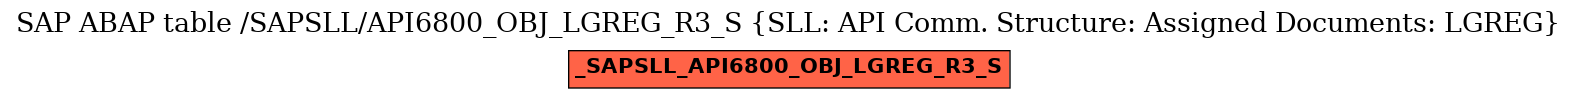 E-R Diagram for table /SAPSLL/API6800_OBJ_LGREG_R3_S (SLL: API Comm. Structure: Assigned Documents: LGREG)